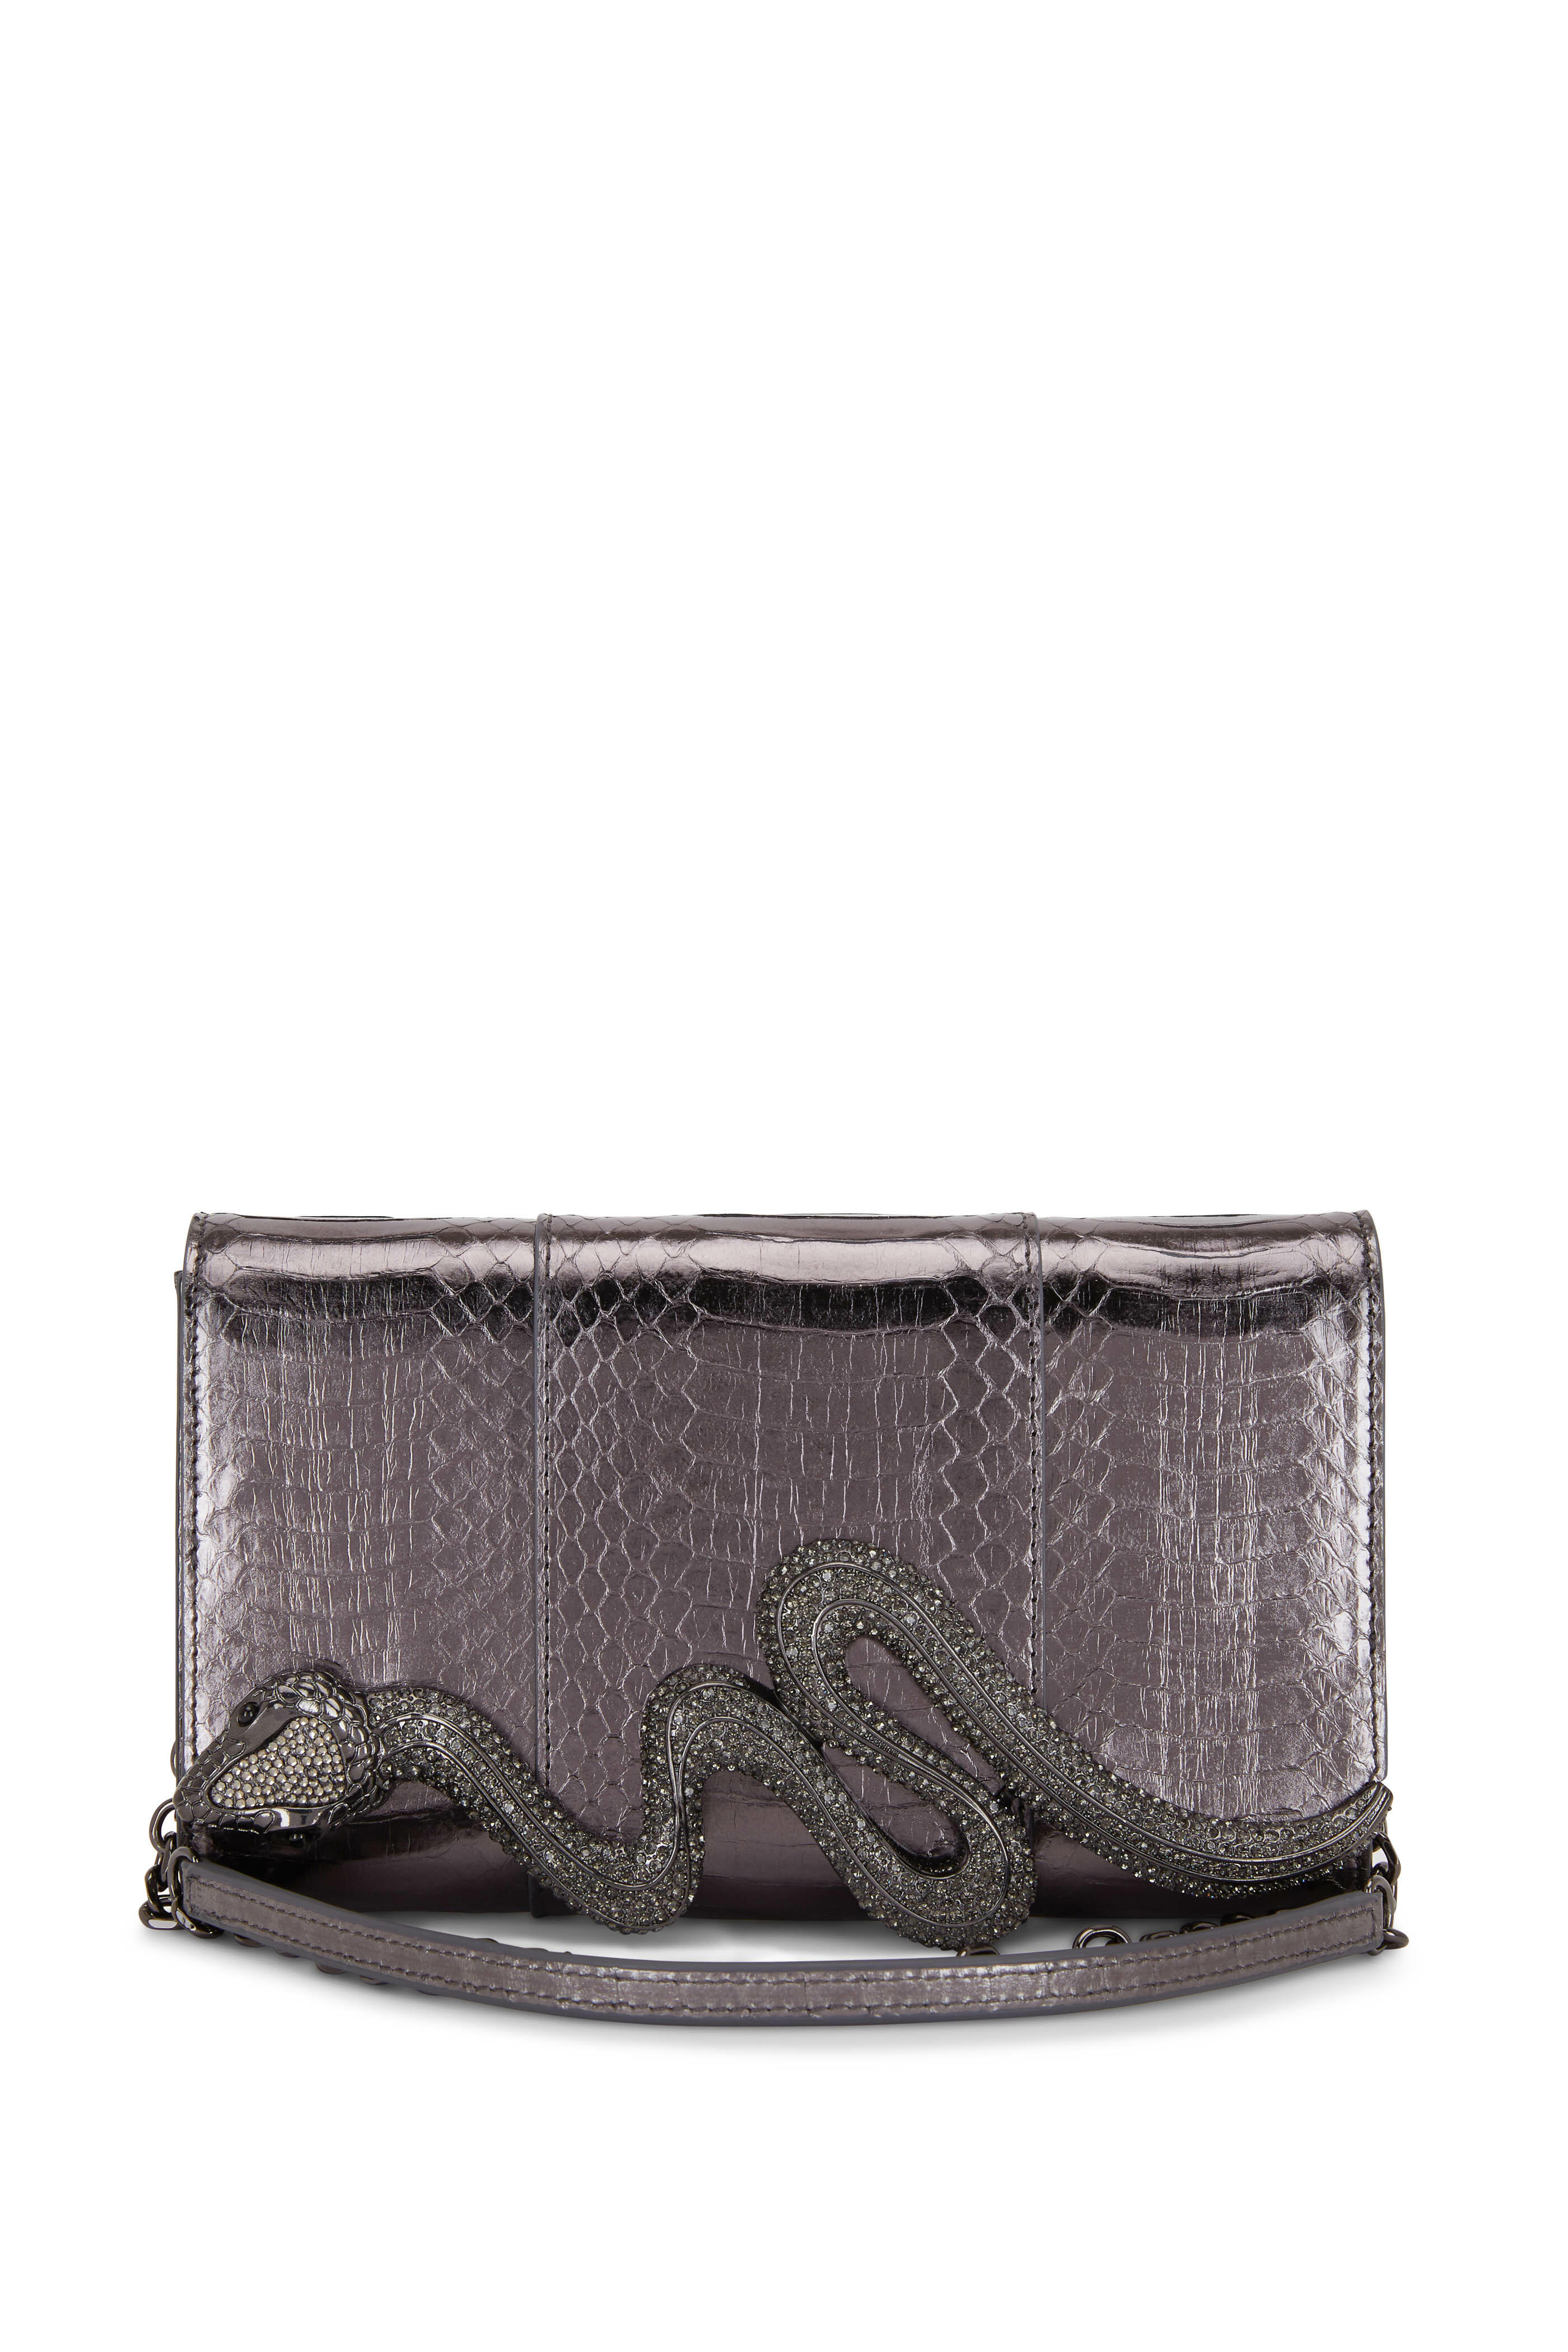 Judith Leiber Couture Serpent Snakeskin Clutch Bag